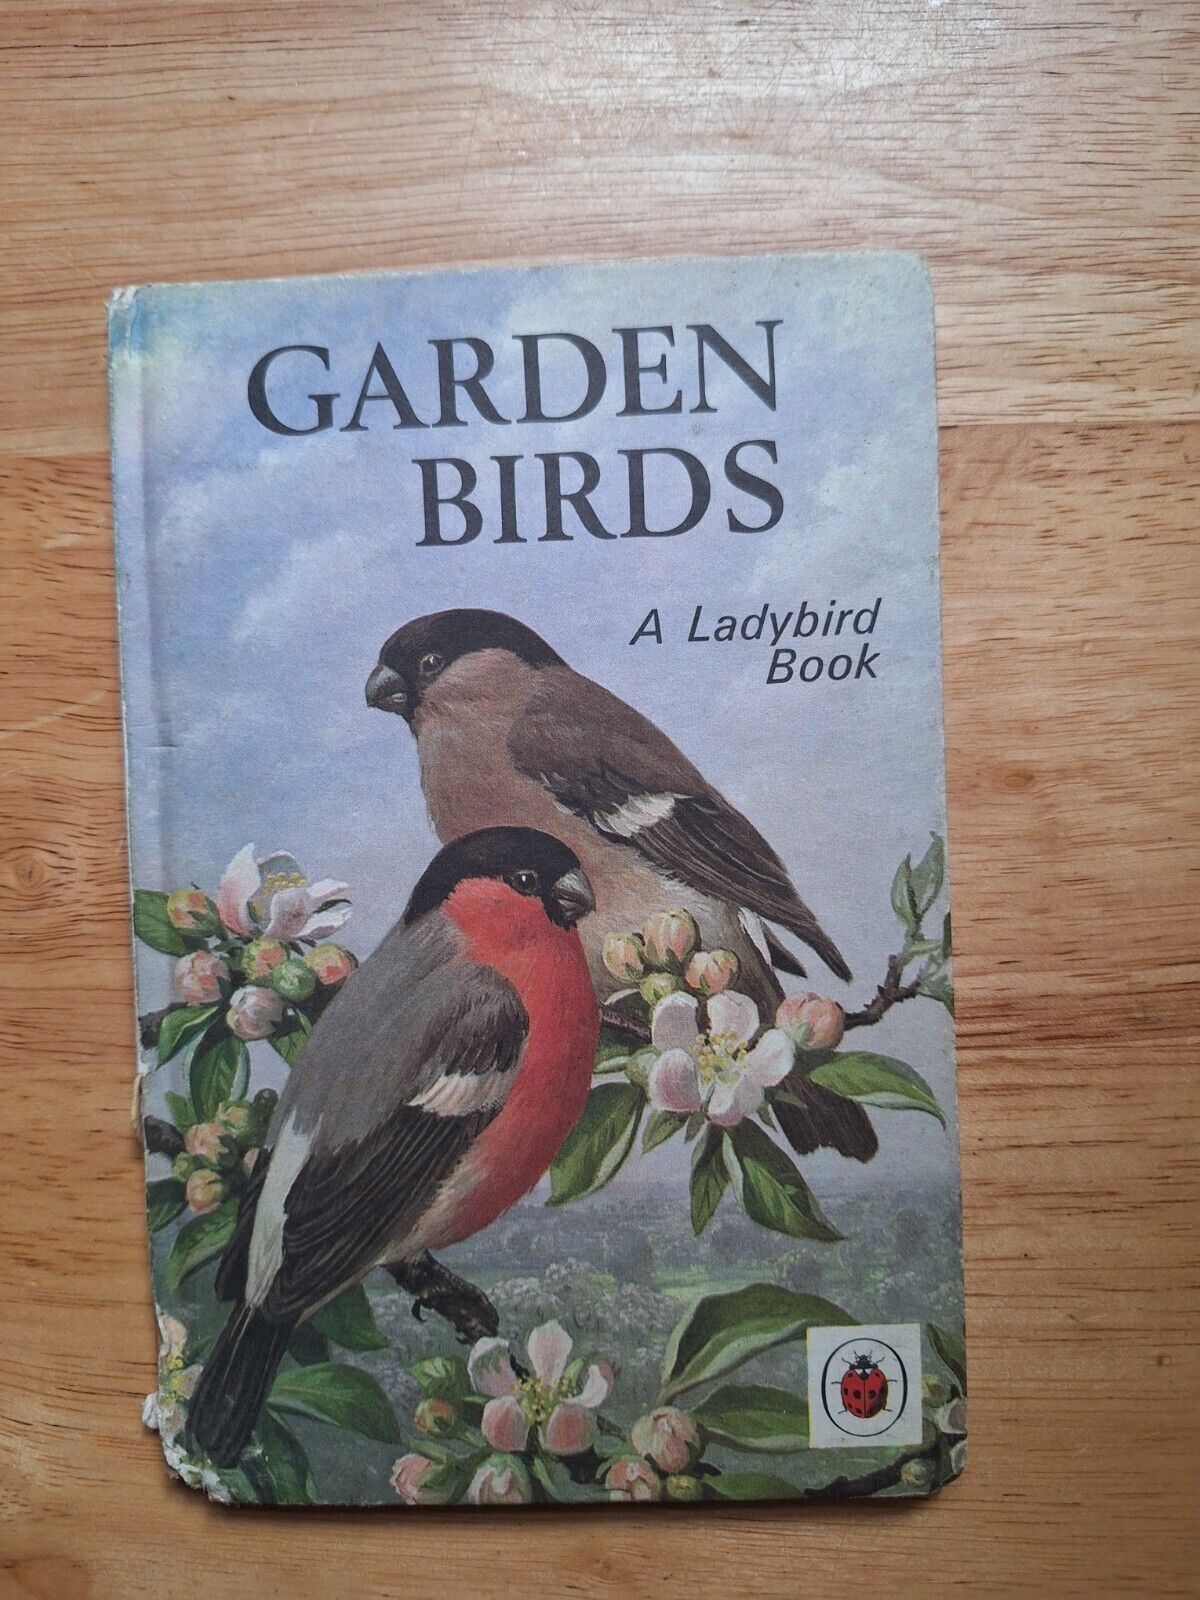 Vintage Garden Birds Ladybird book